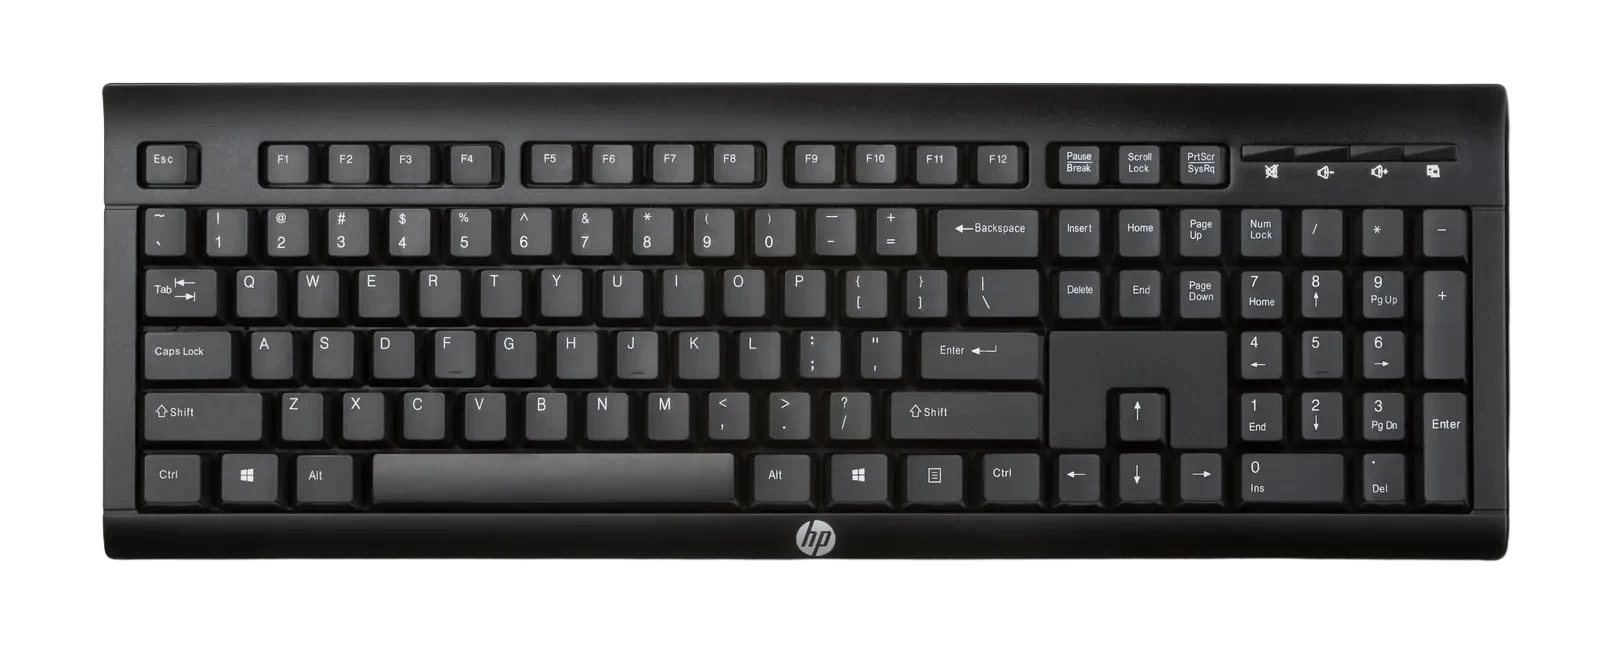 HP K2500 Wireless Keyboard Black - E5E78AA